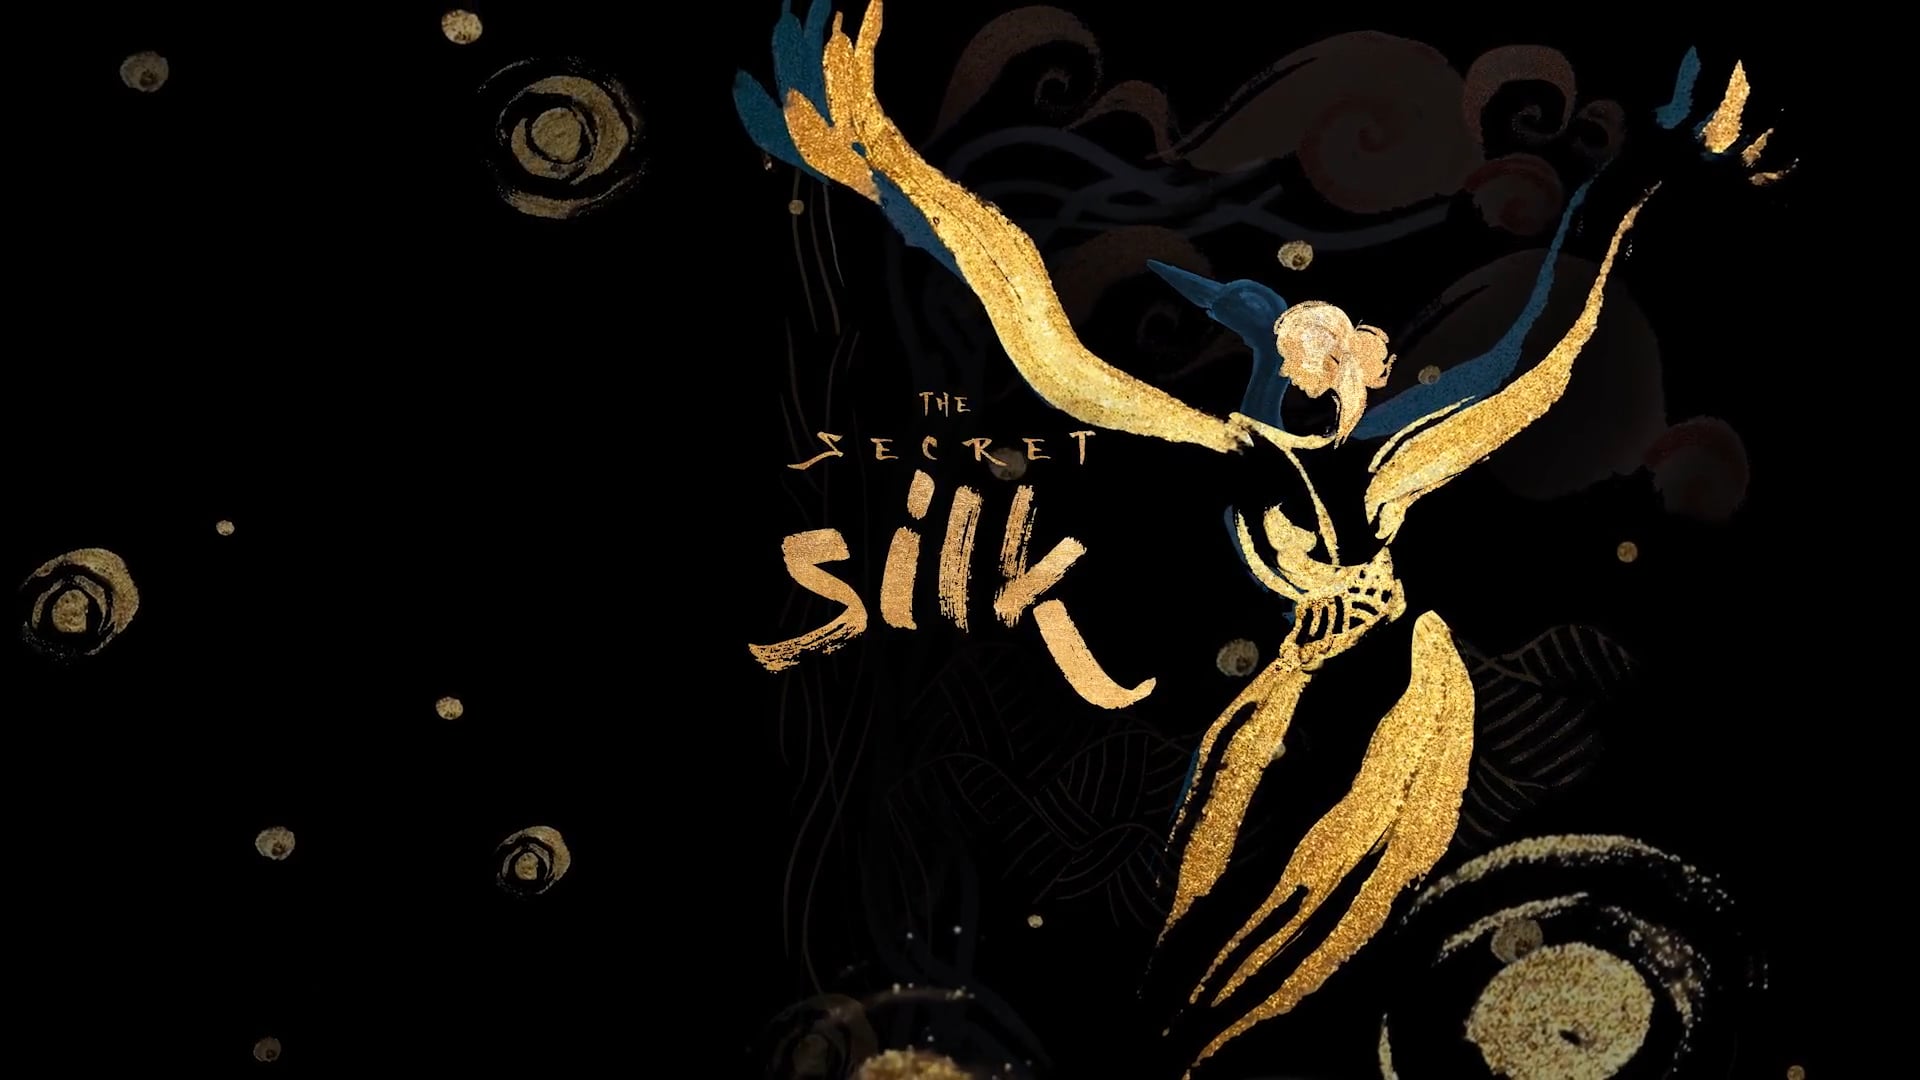  The Secret Silk 